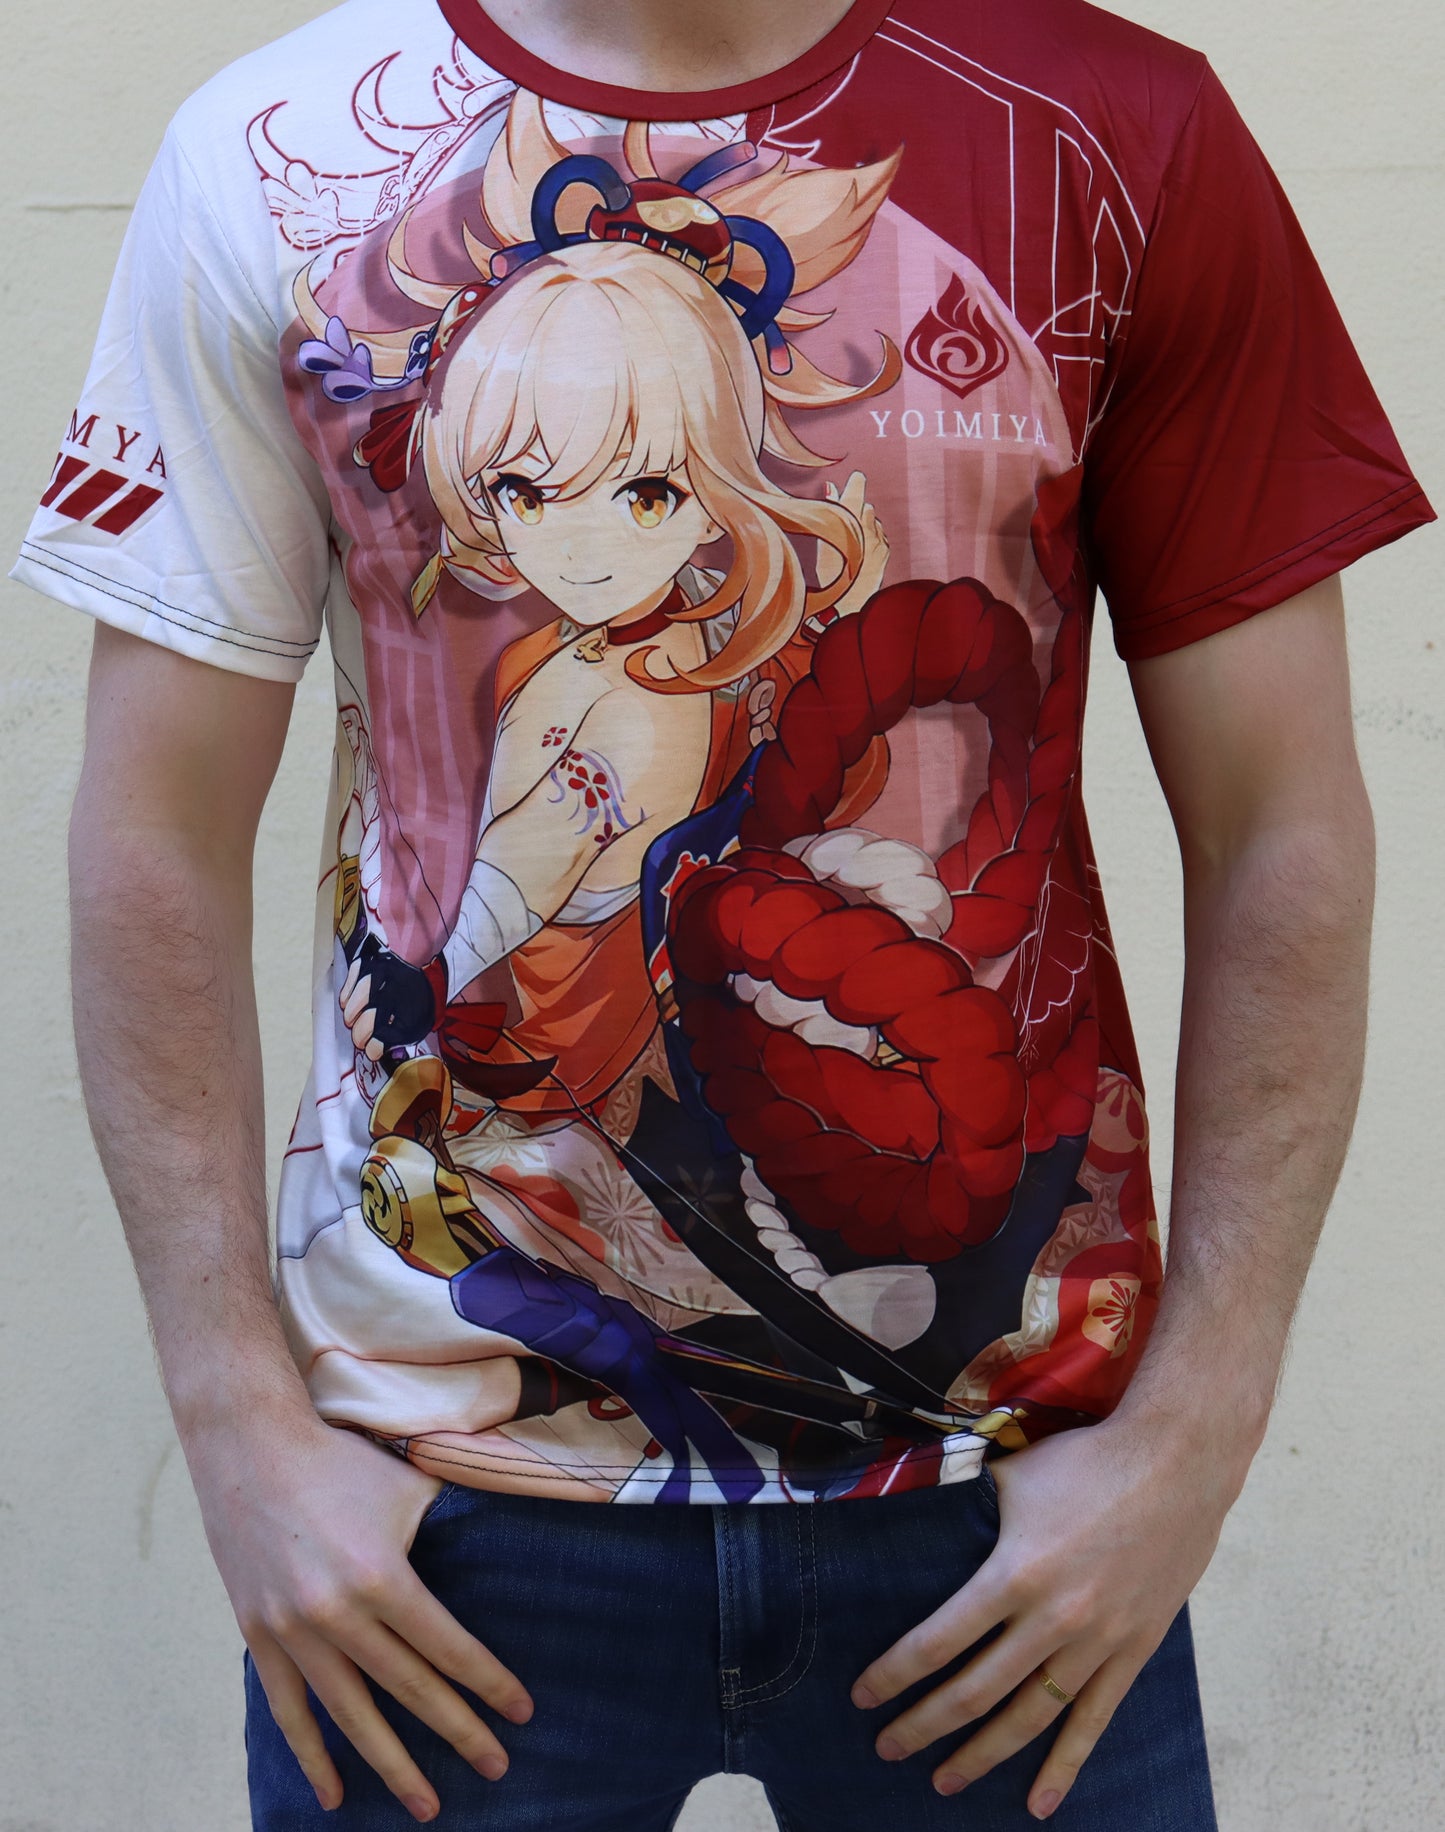 Yoimiya T-Shirt(Price Does Not Include Shipping)